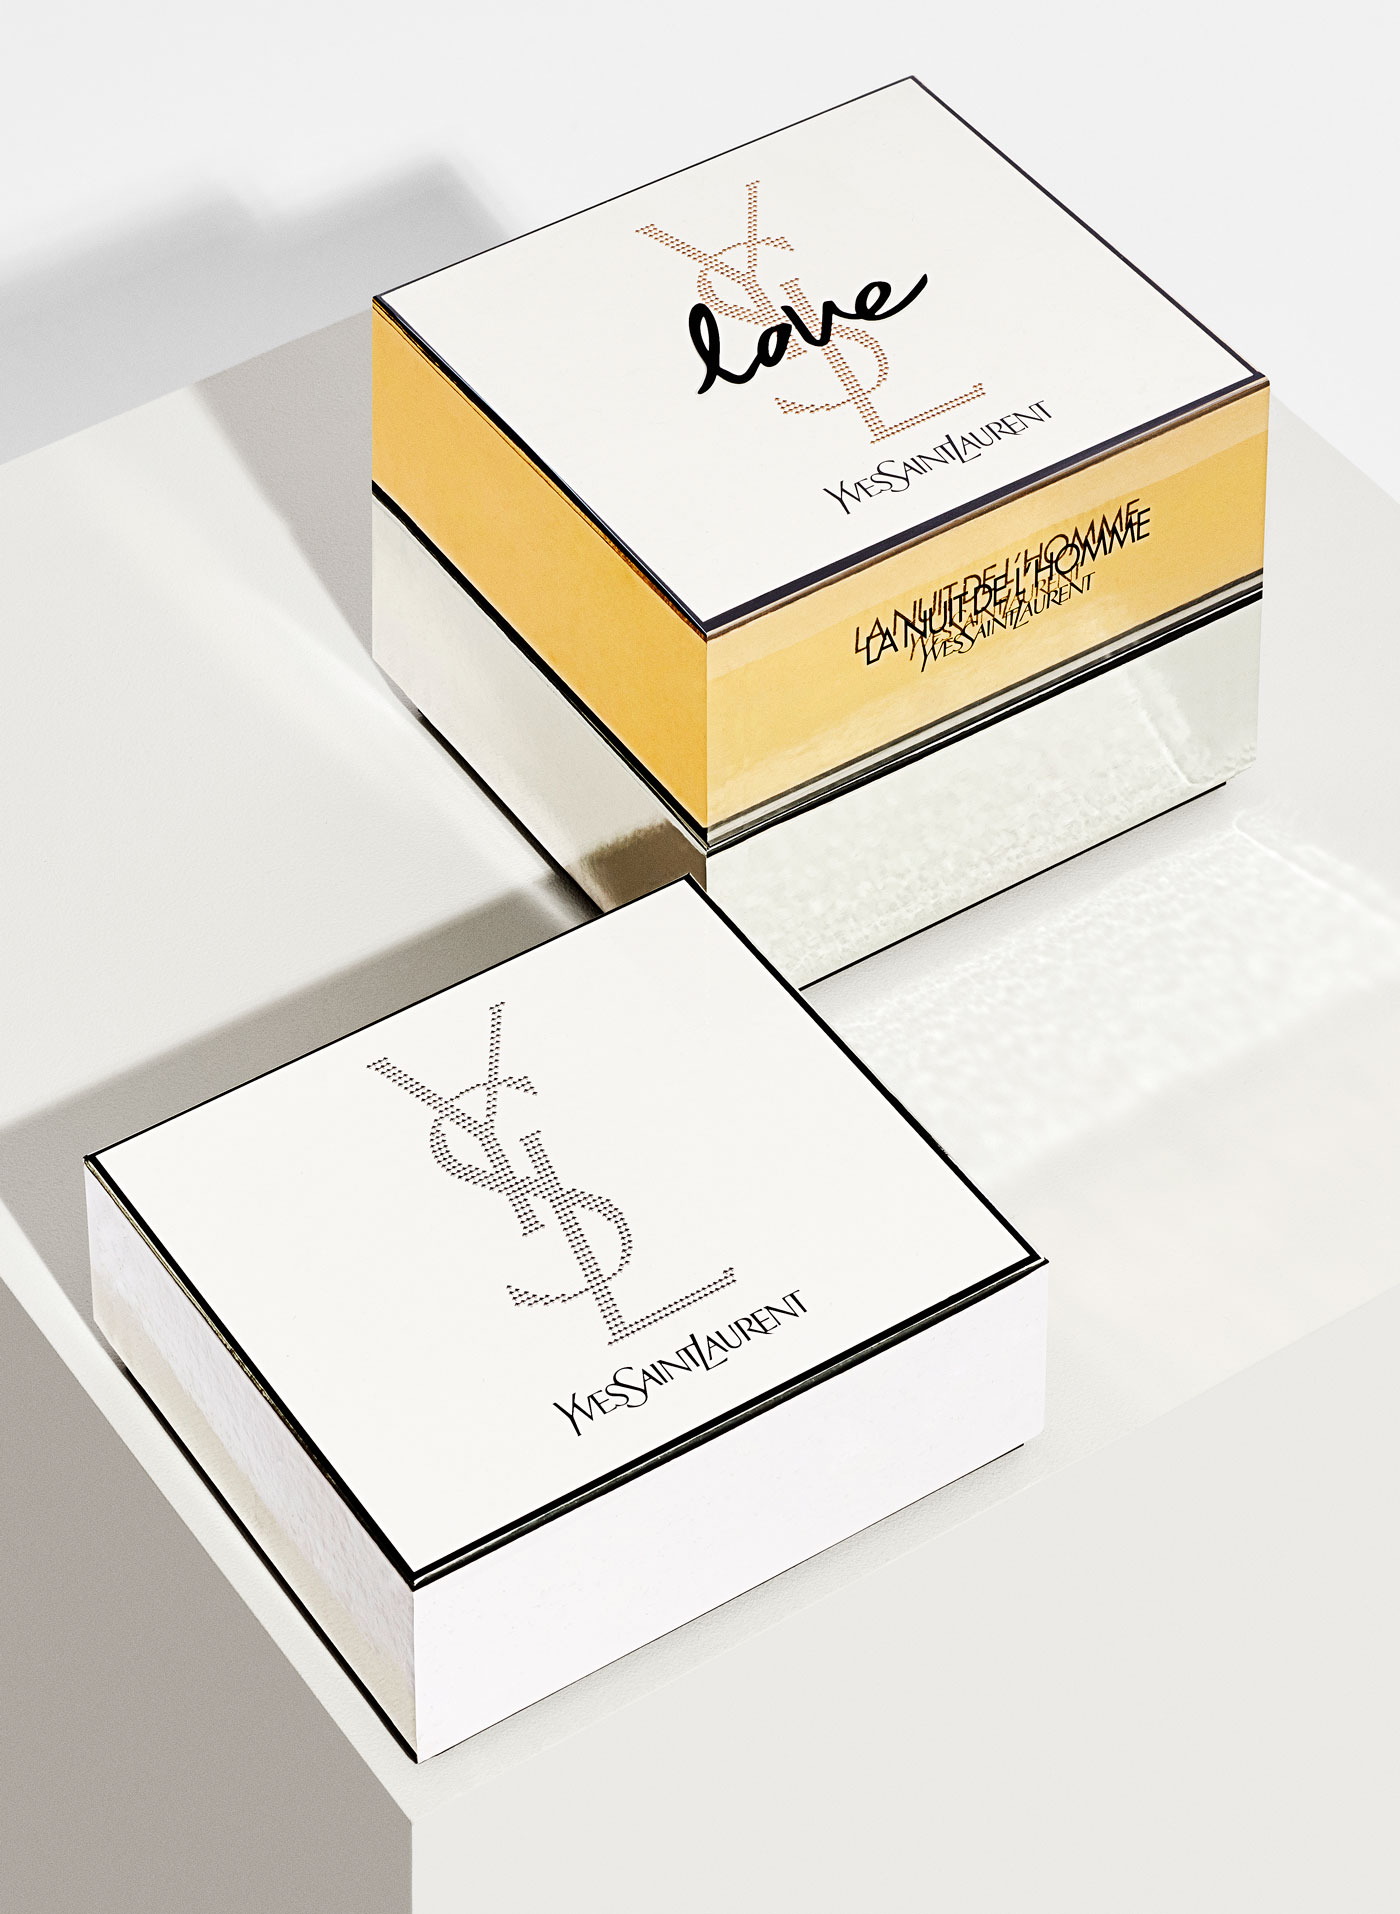 Yves Saint Laurent / YSL Parfums – Love concept packaging